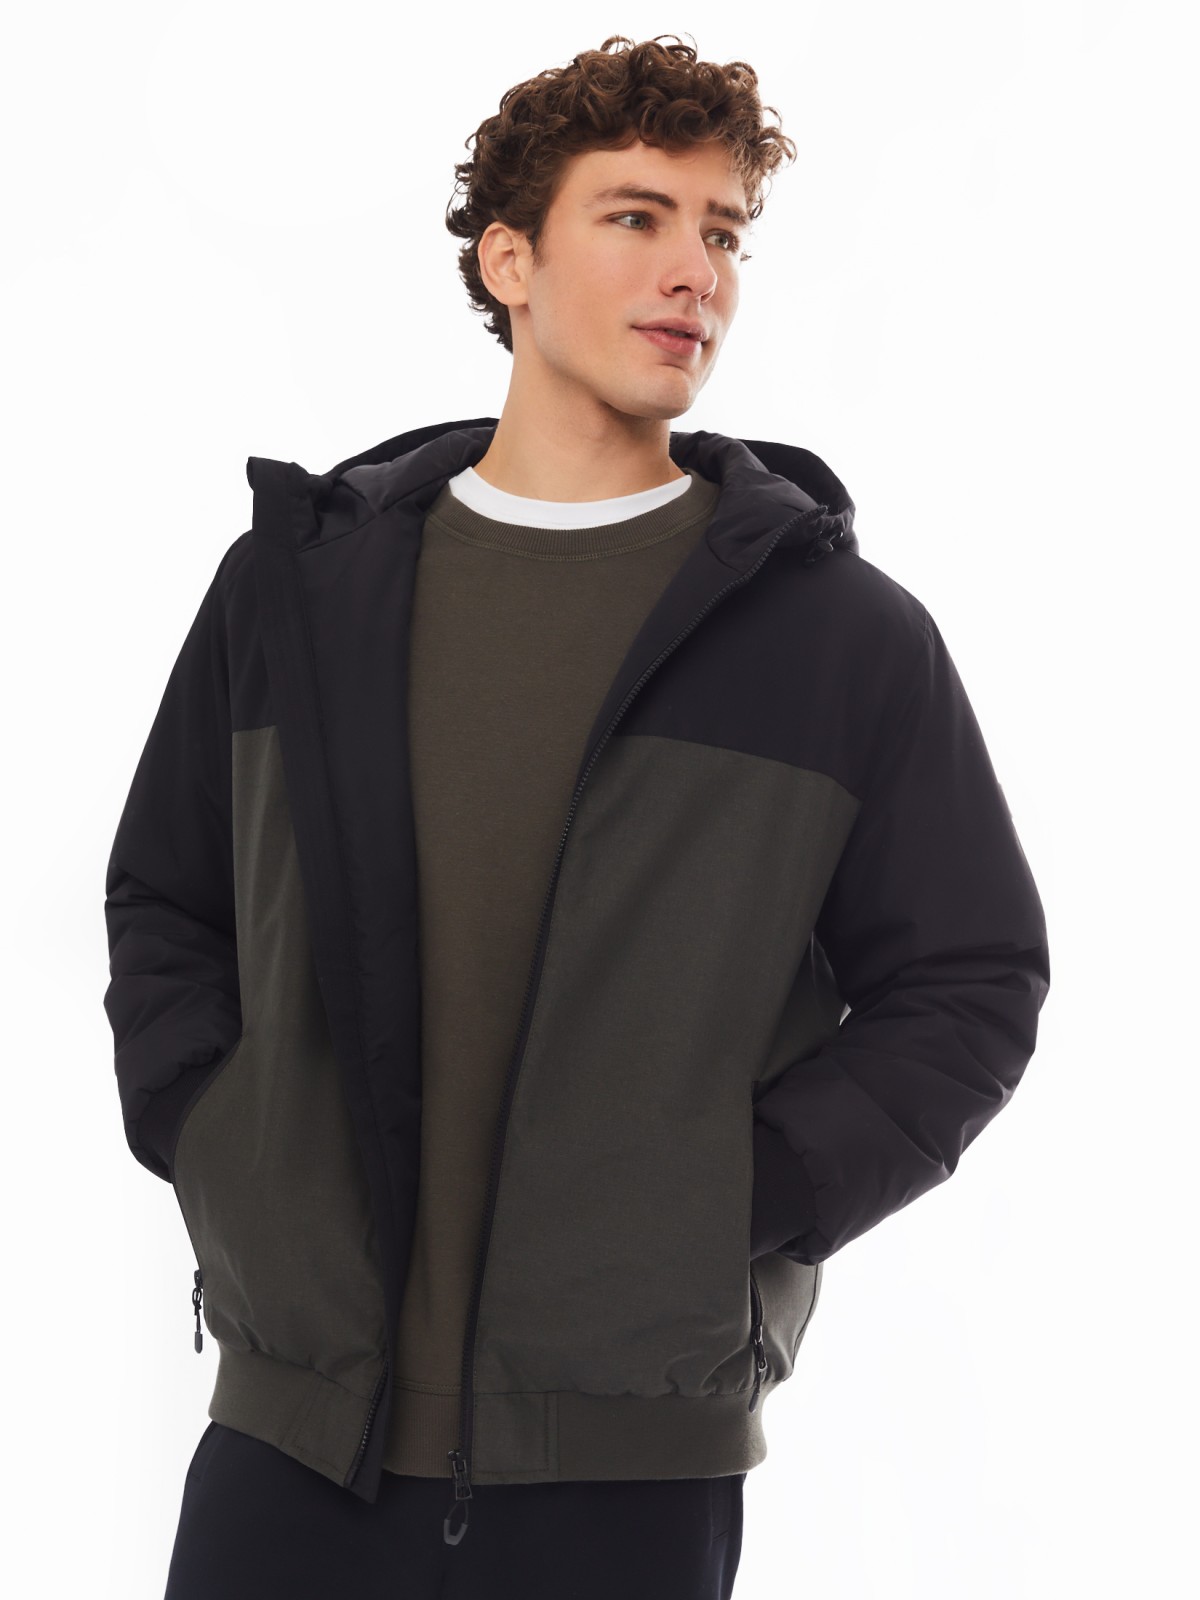 Утеплённая куртка-бомбер на синтепоне с капюшоном zolla 01412510L034, цвет хаки, размер M - фото 1